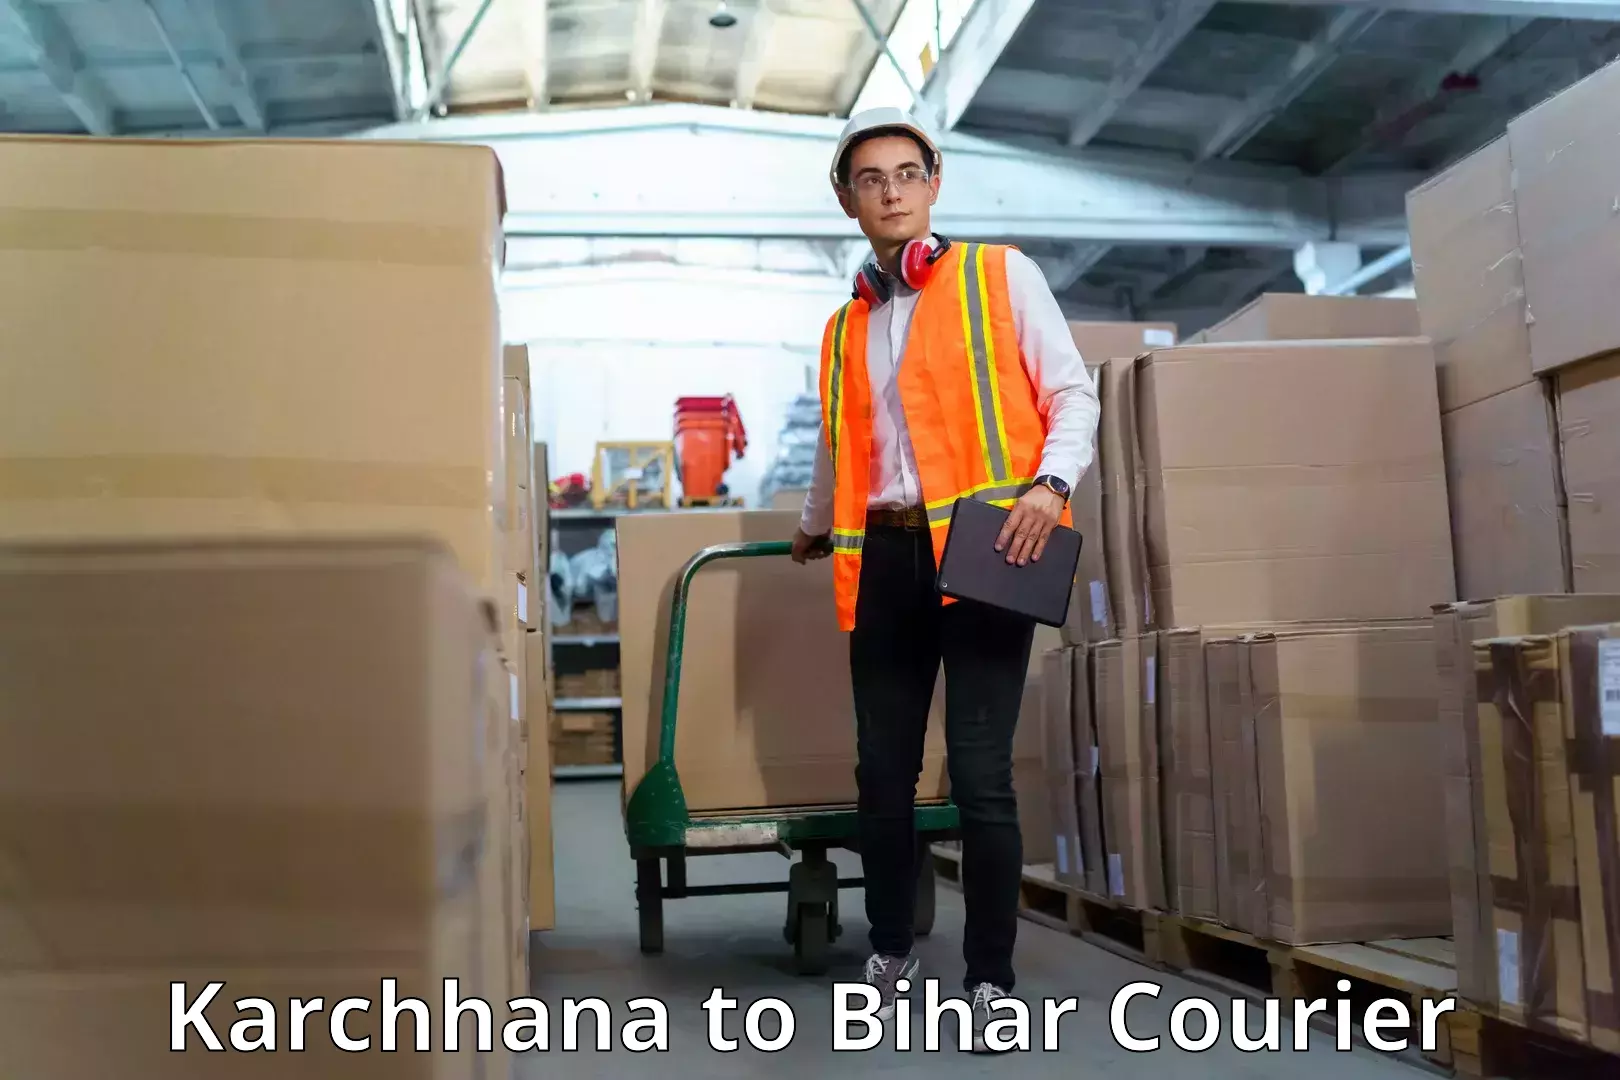 Urgent courier needs Karchhana to Mahnar Bazar